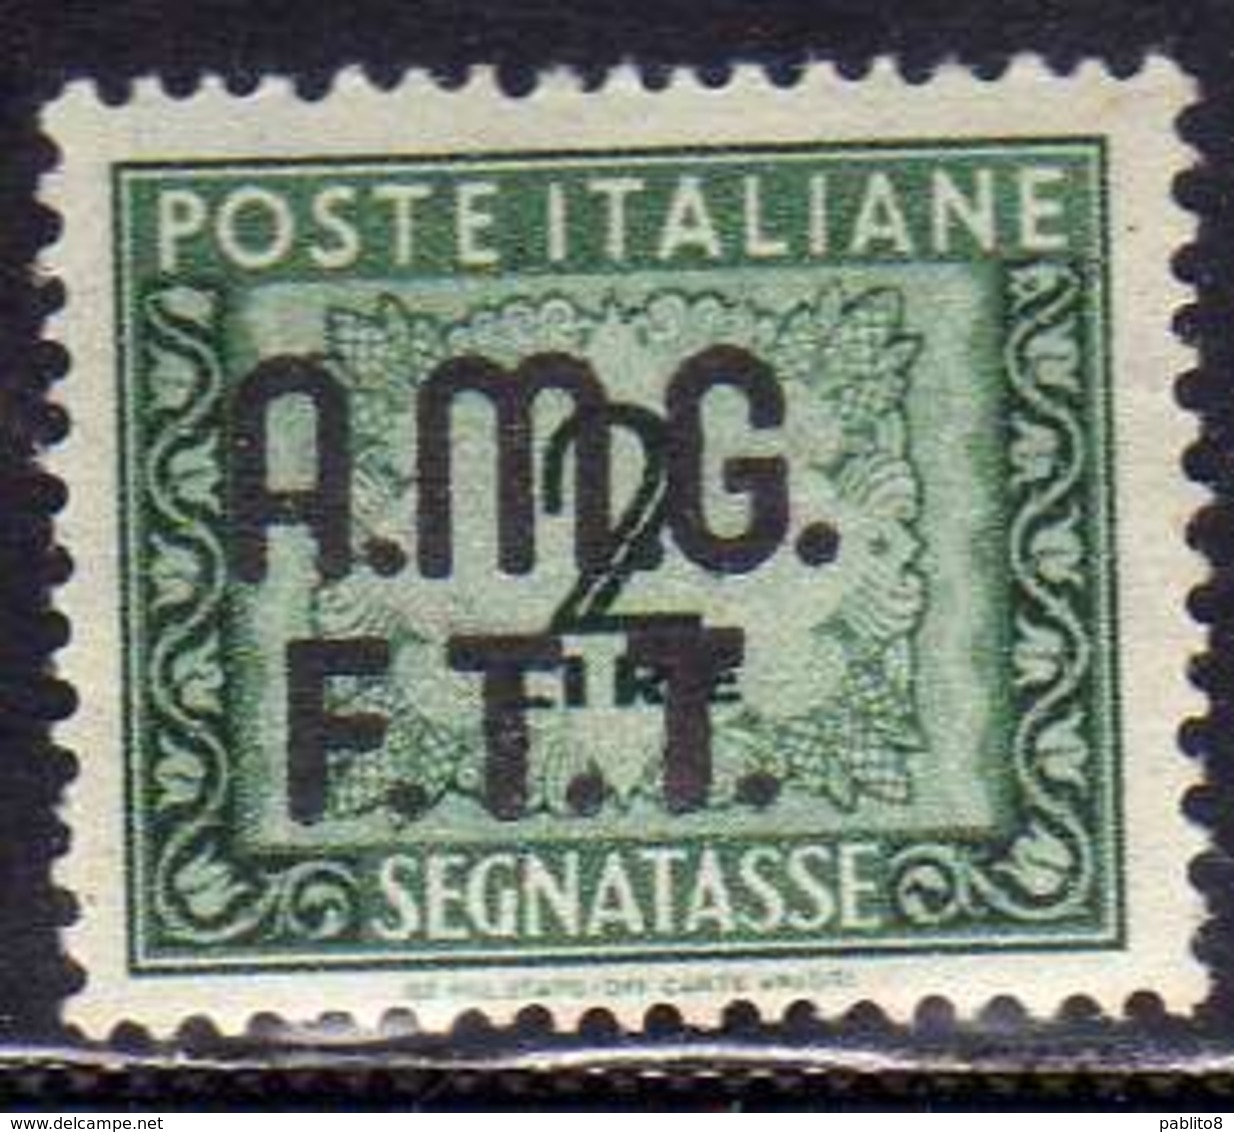 TRIESTE A 1947 - 1949 AMG-FTT SOPRASTAMPATO OVERPRINTED SEGNATASSE TAXES TASSE POSTAGE DUE LIRE 2 MNH - Postage Due